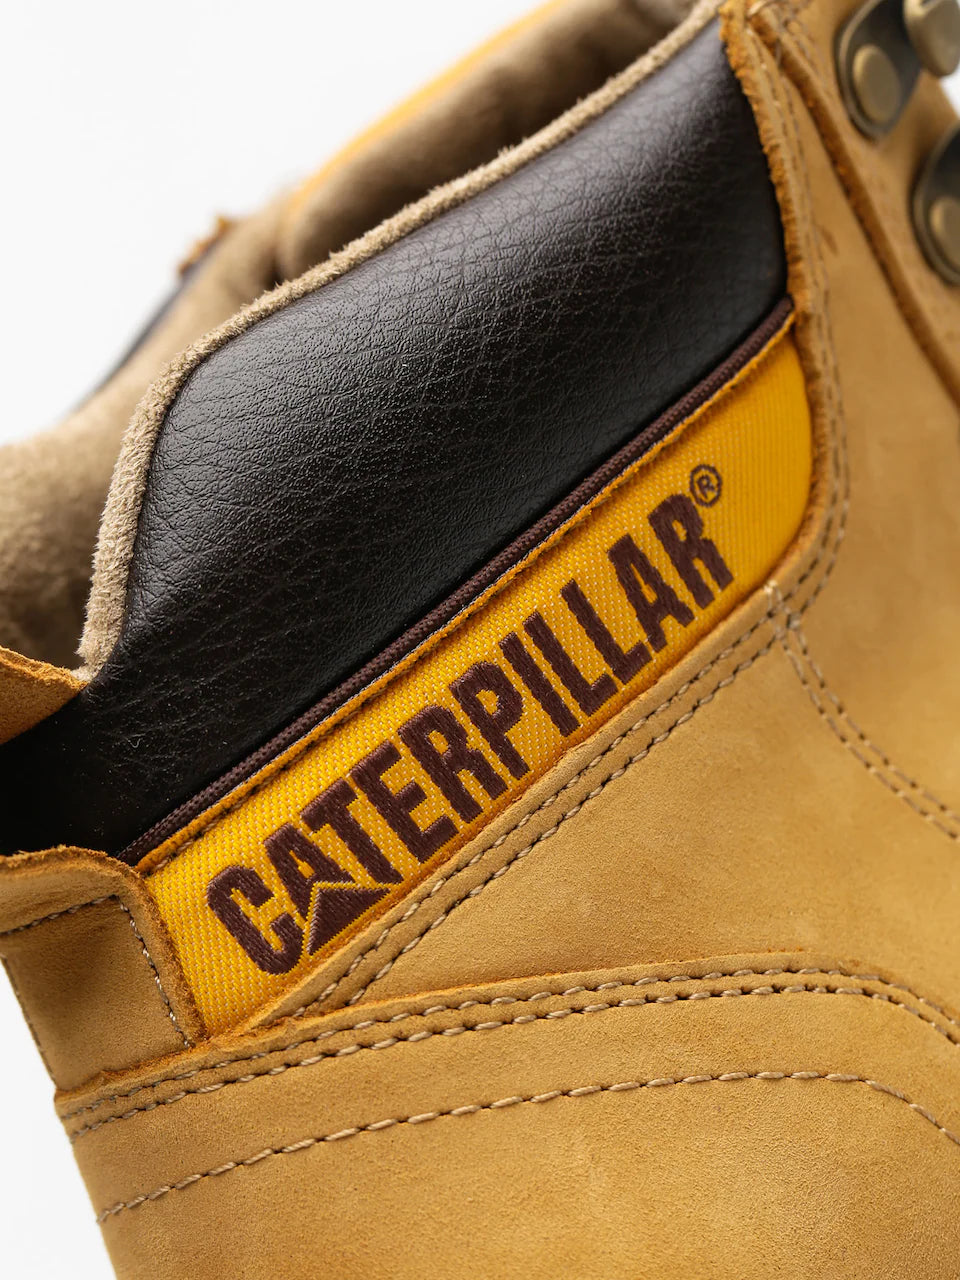 Caterpillar Supersede Boot